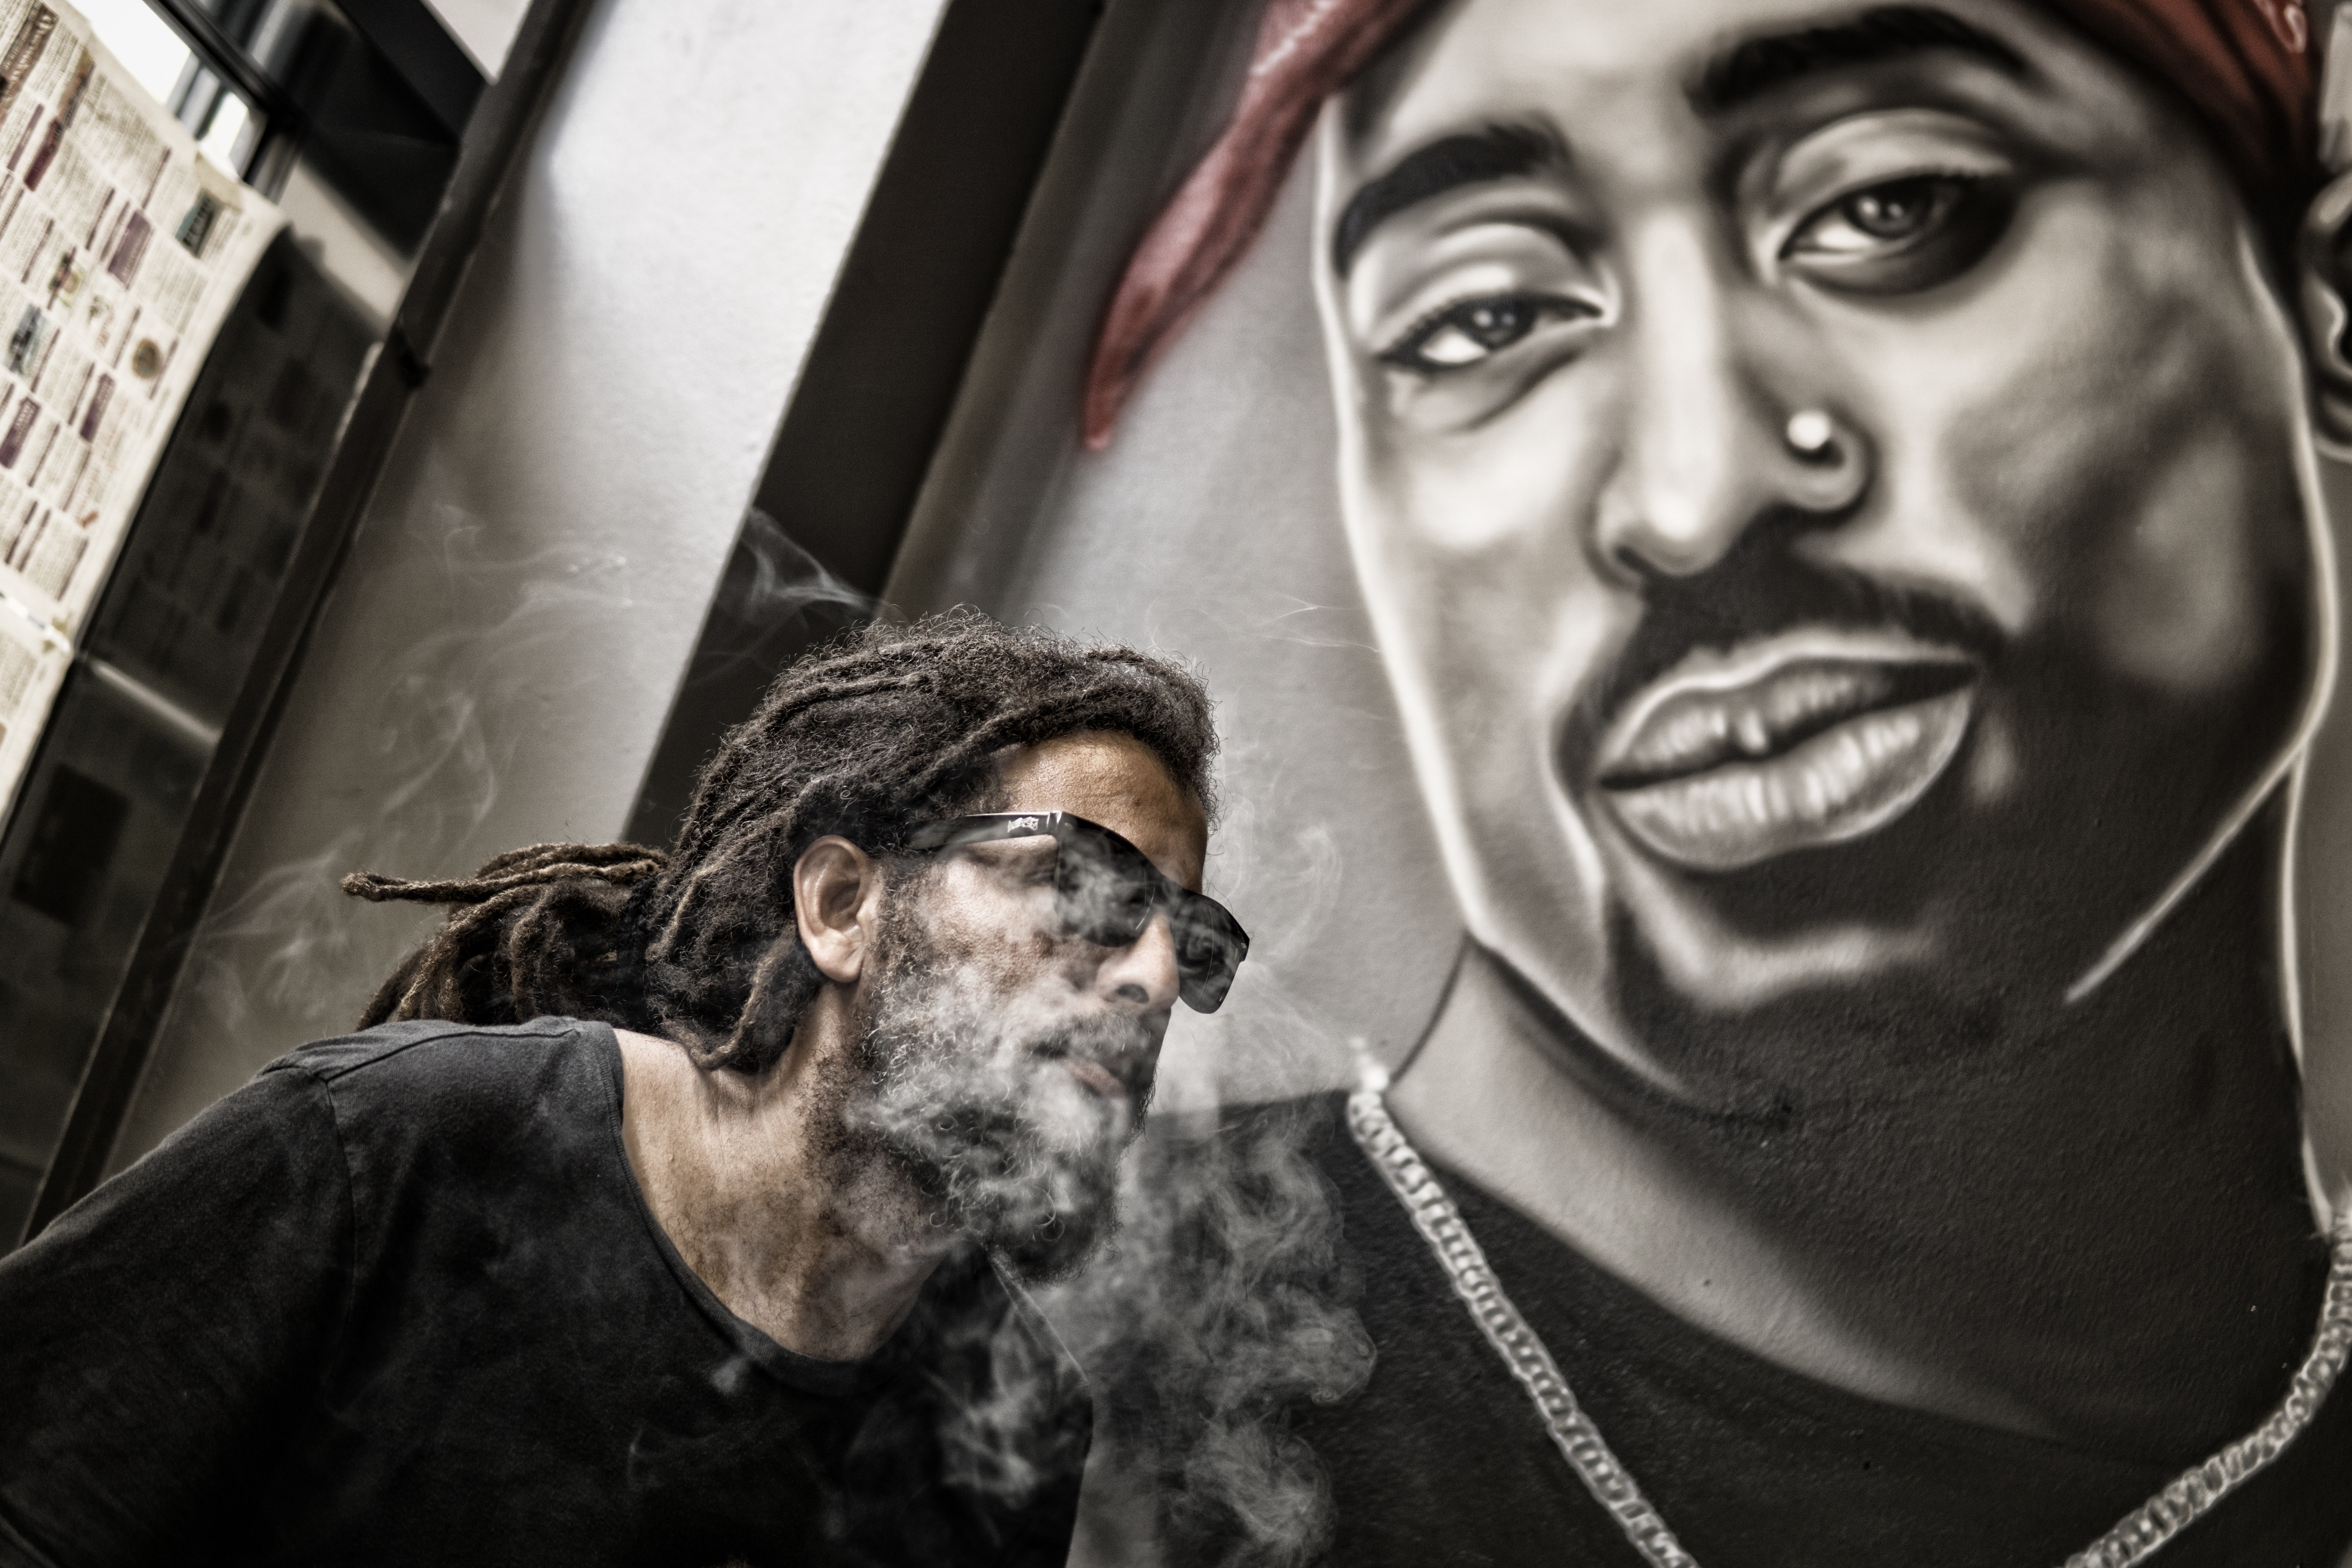 Man With Dreadlocks and Sunglasses Poses Near Tupac Shakur Portrait, Actor, Music, Wall, Urban, HQ Photo